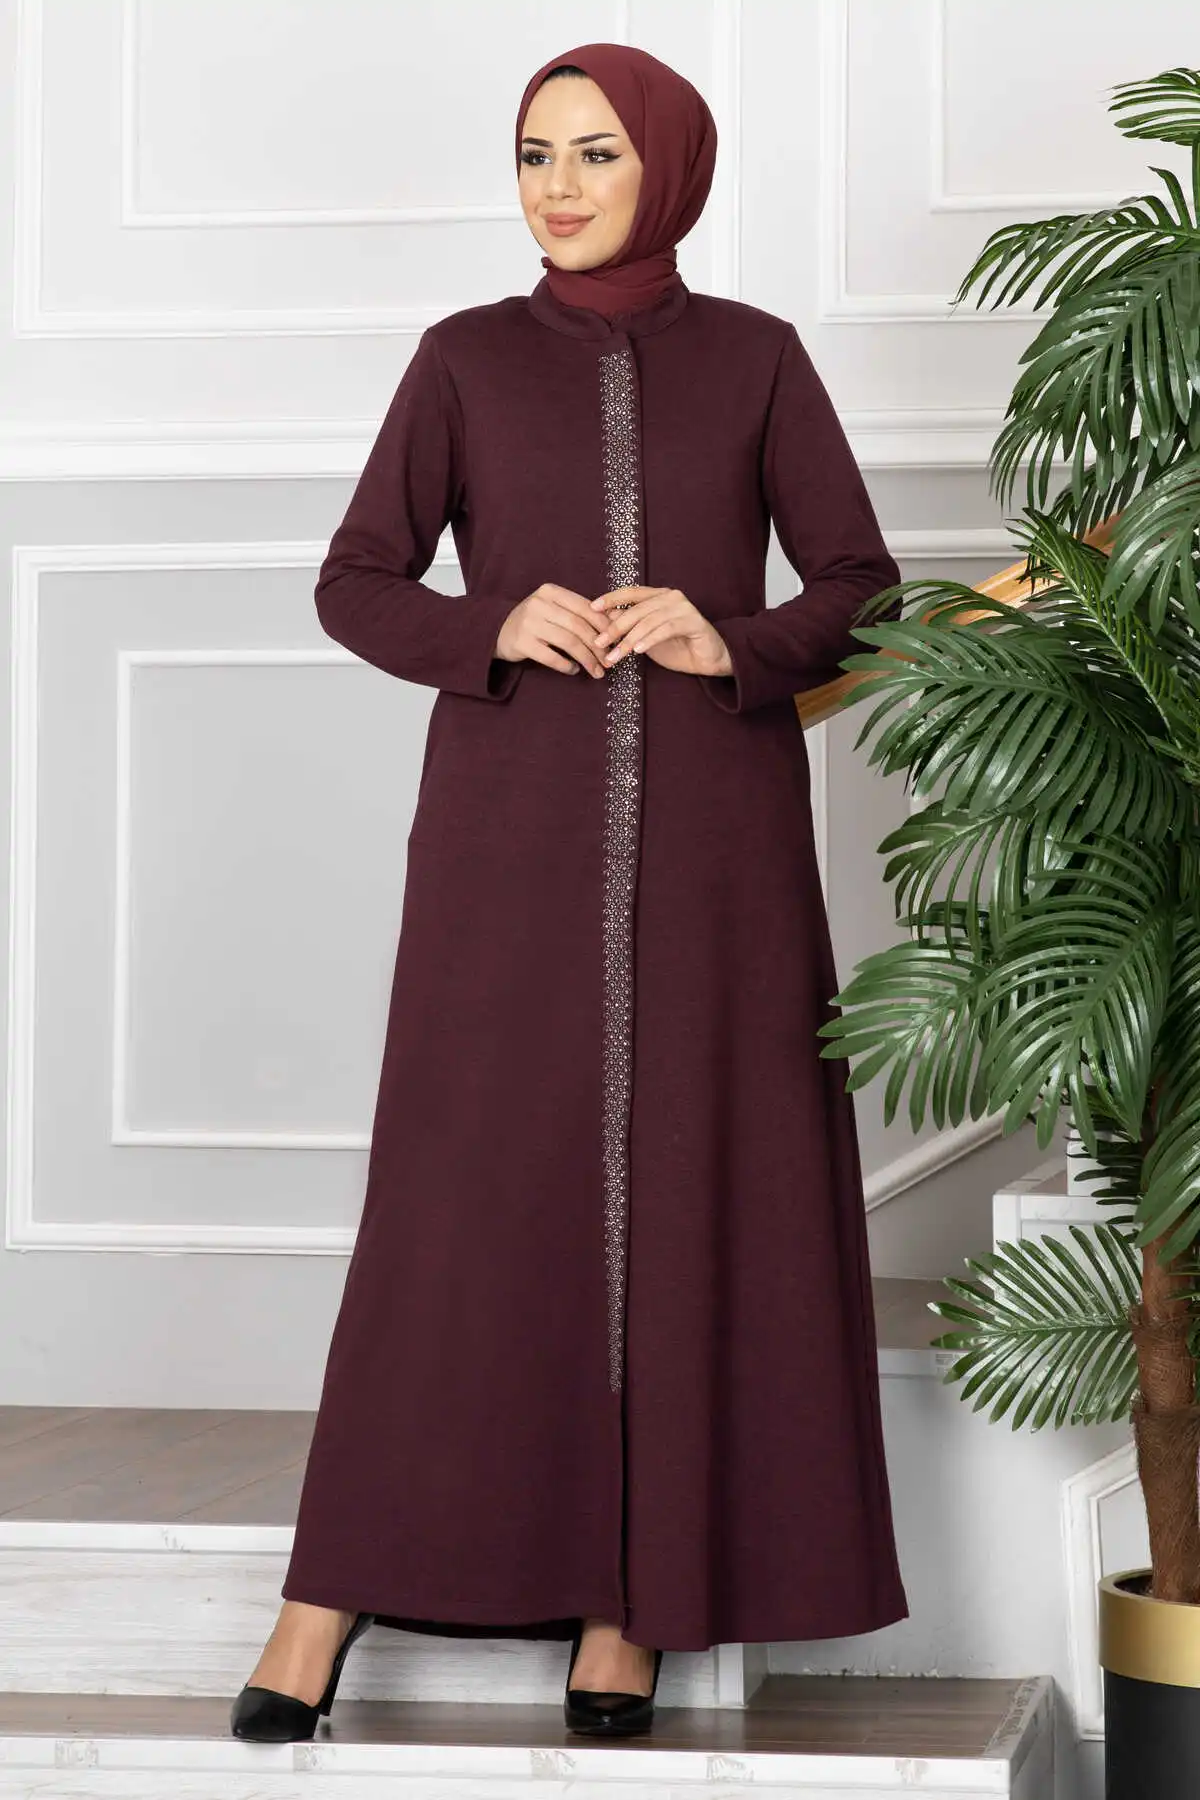 Hijab Abaya with Stone Accessories Women Long Sleeve Muslim Abaya Women hijab clothing Muslim Dress Turkey Dubai hijab clothing